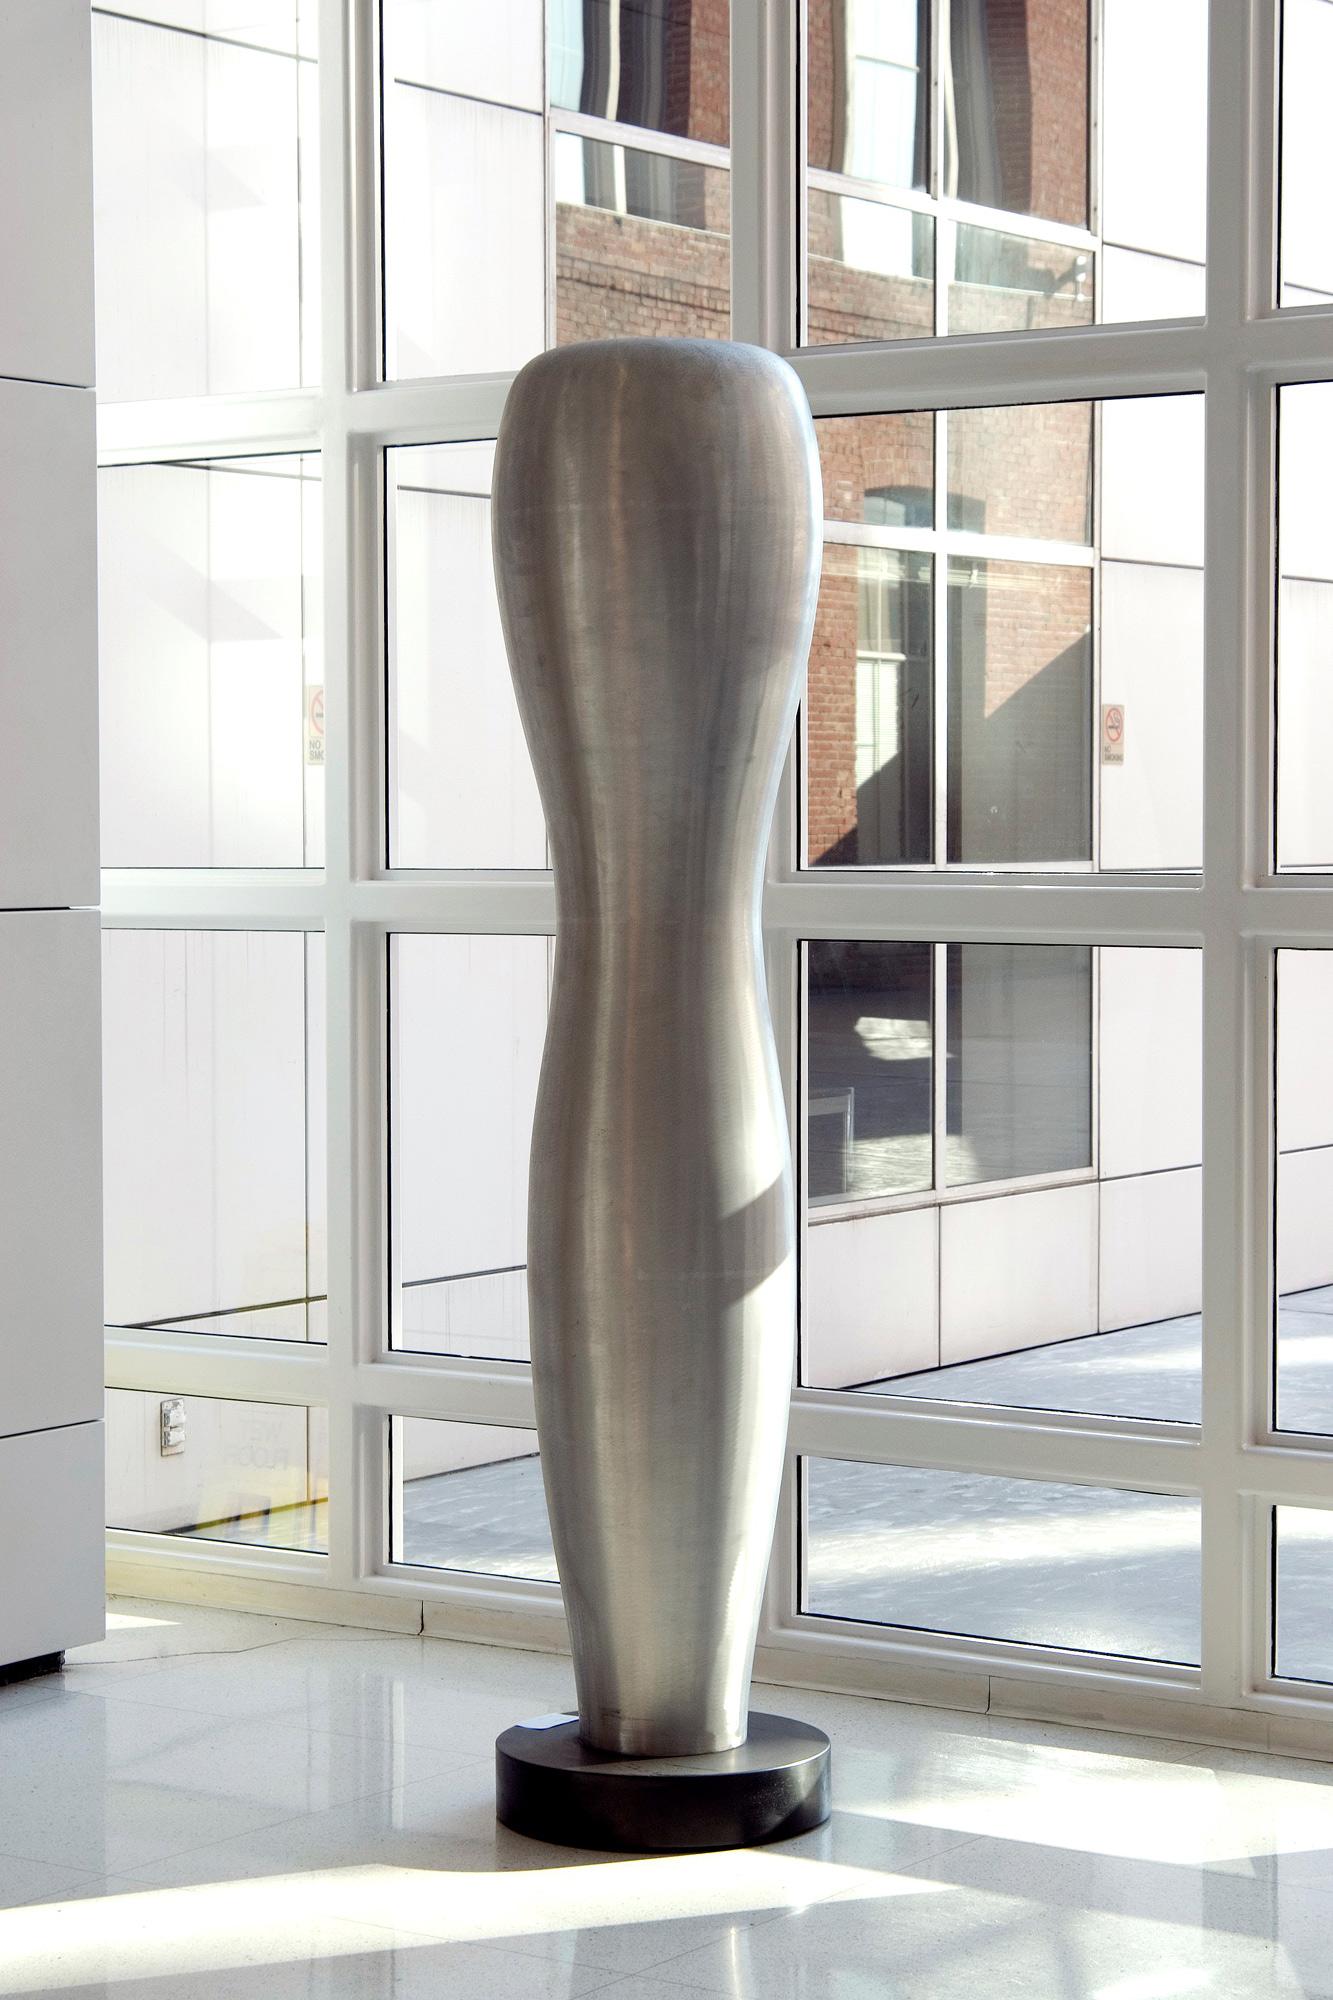 Archie Held Abstract Sculpture - "Eve" minimalist sculpture